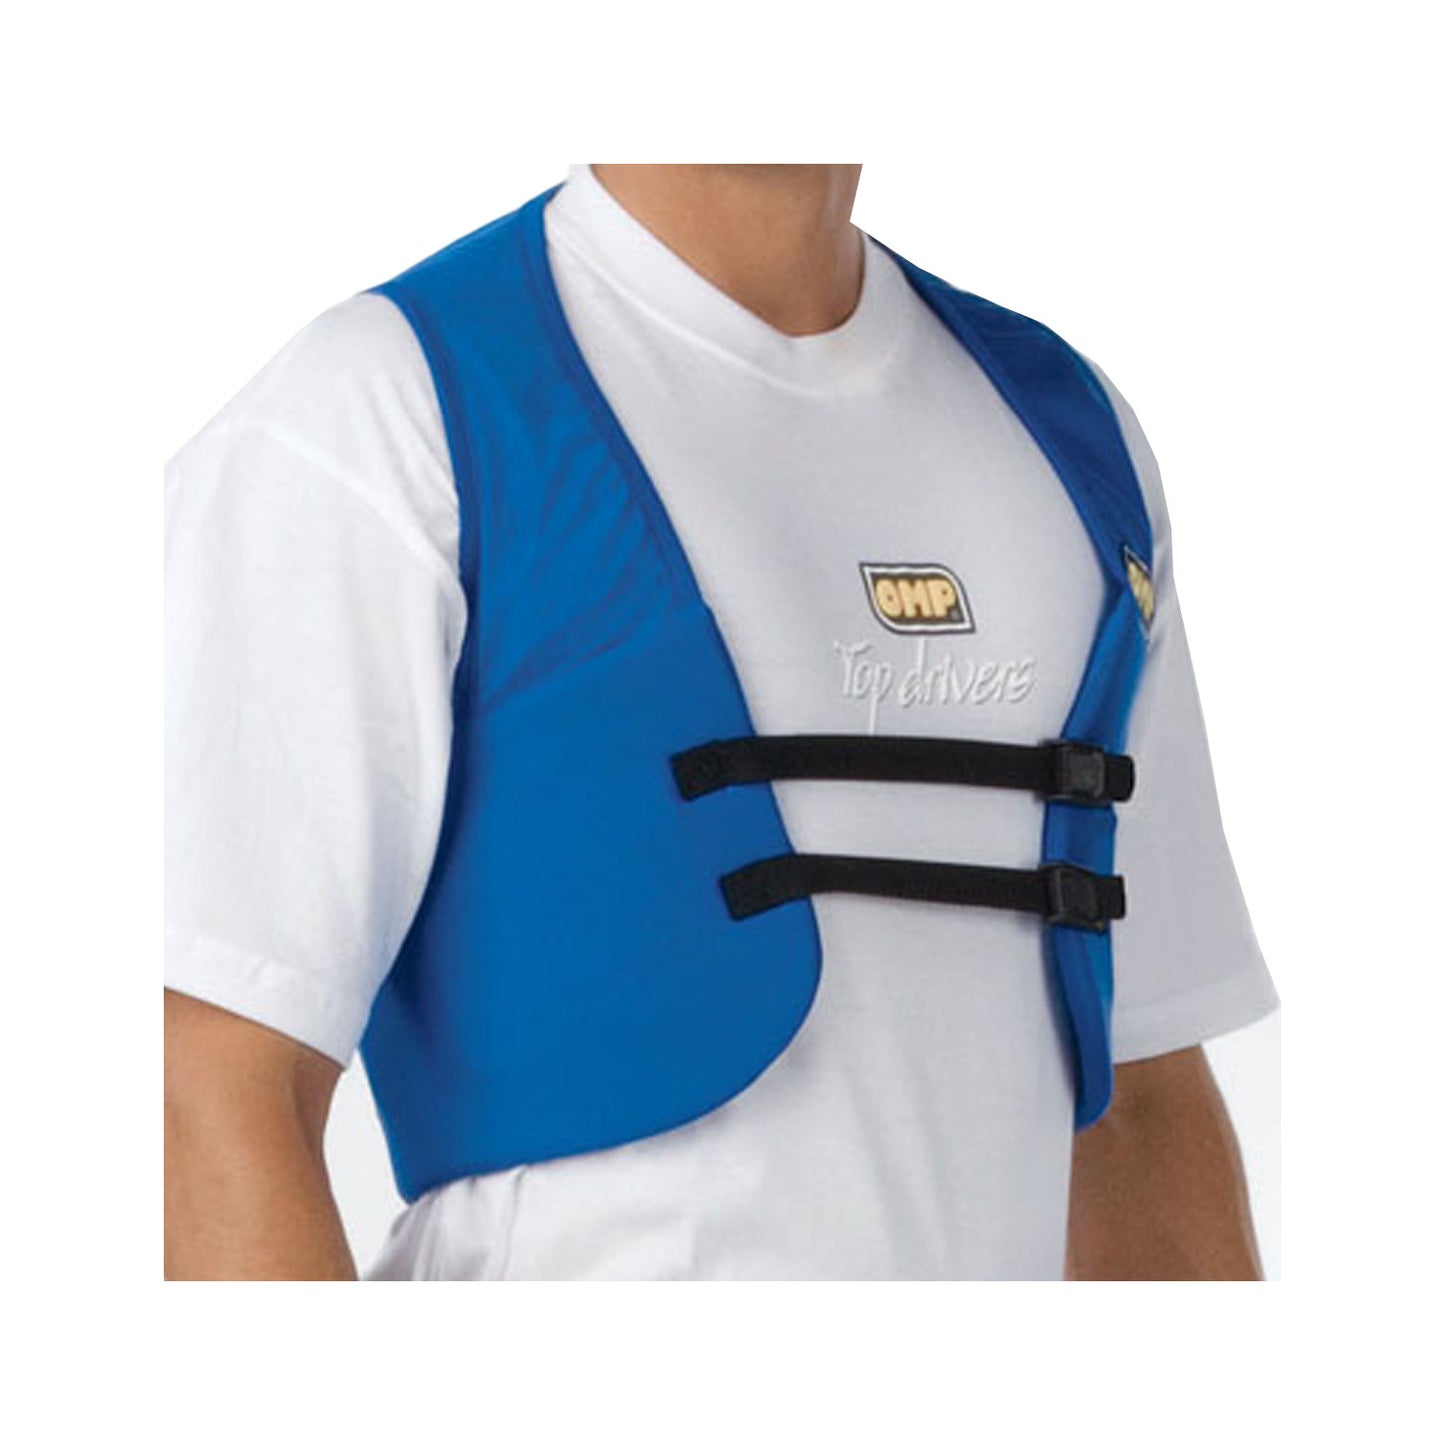 OMP Italy Rib Protection Vest